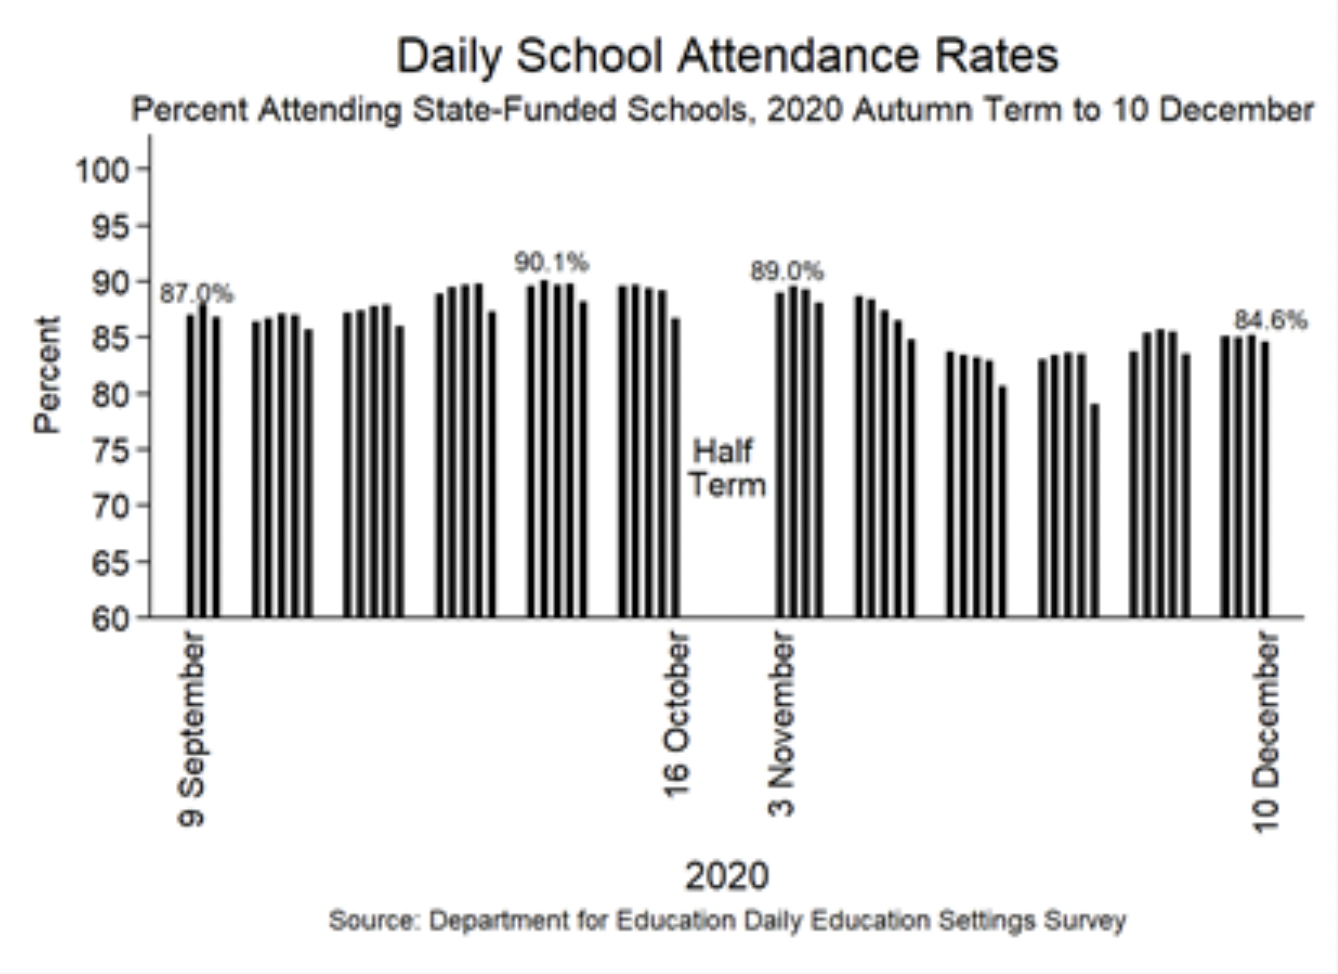 school attendance